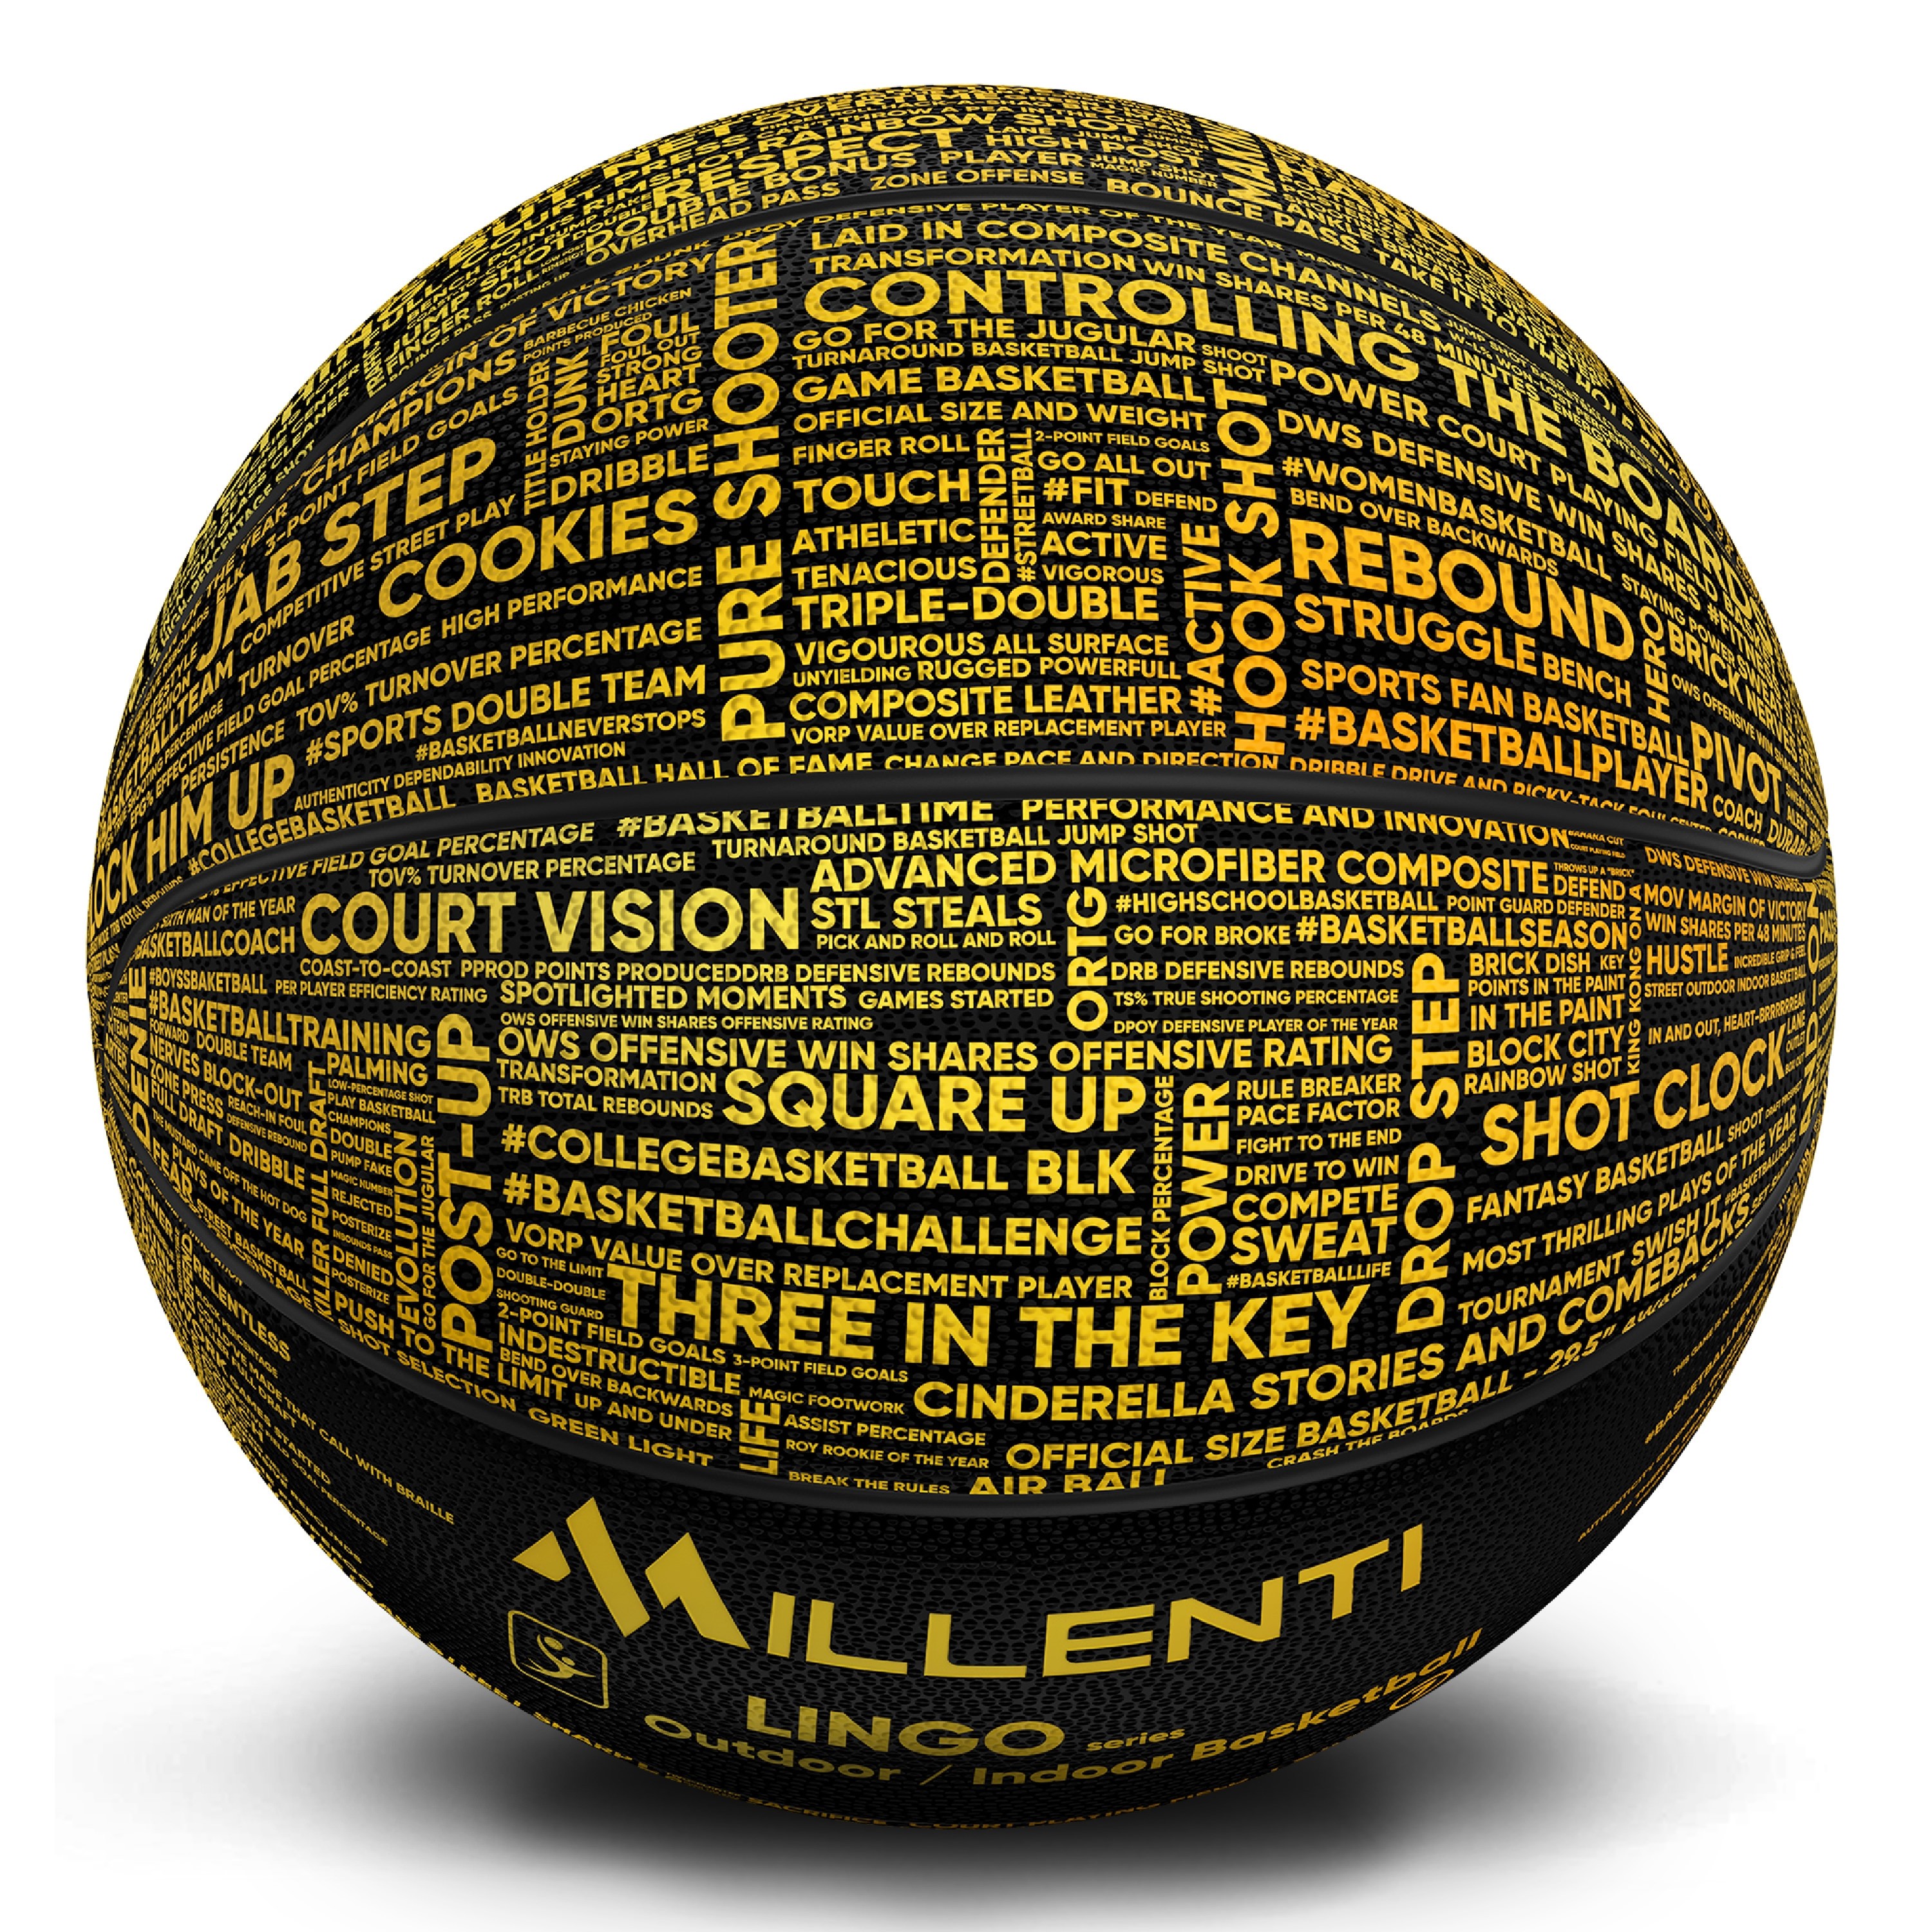 Millenti Street-Cred-Lingo Basketball Size 7 - Award Winning Design Chick Hearn Basketball Phrases. Worlds #1 Basketball-Language Streetball, Size 29.5 - Gold Basketball BB0107GD